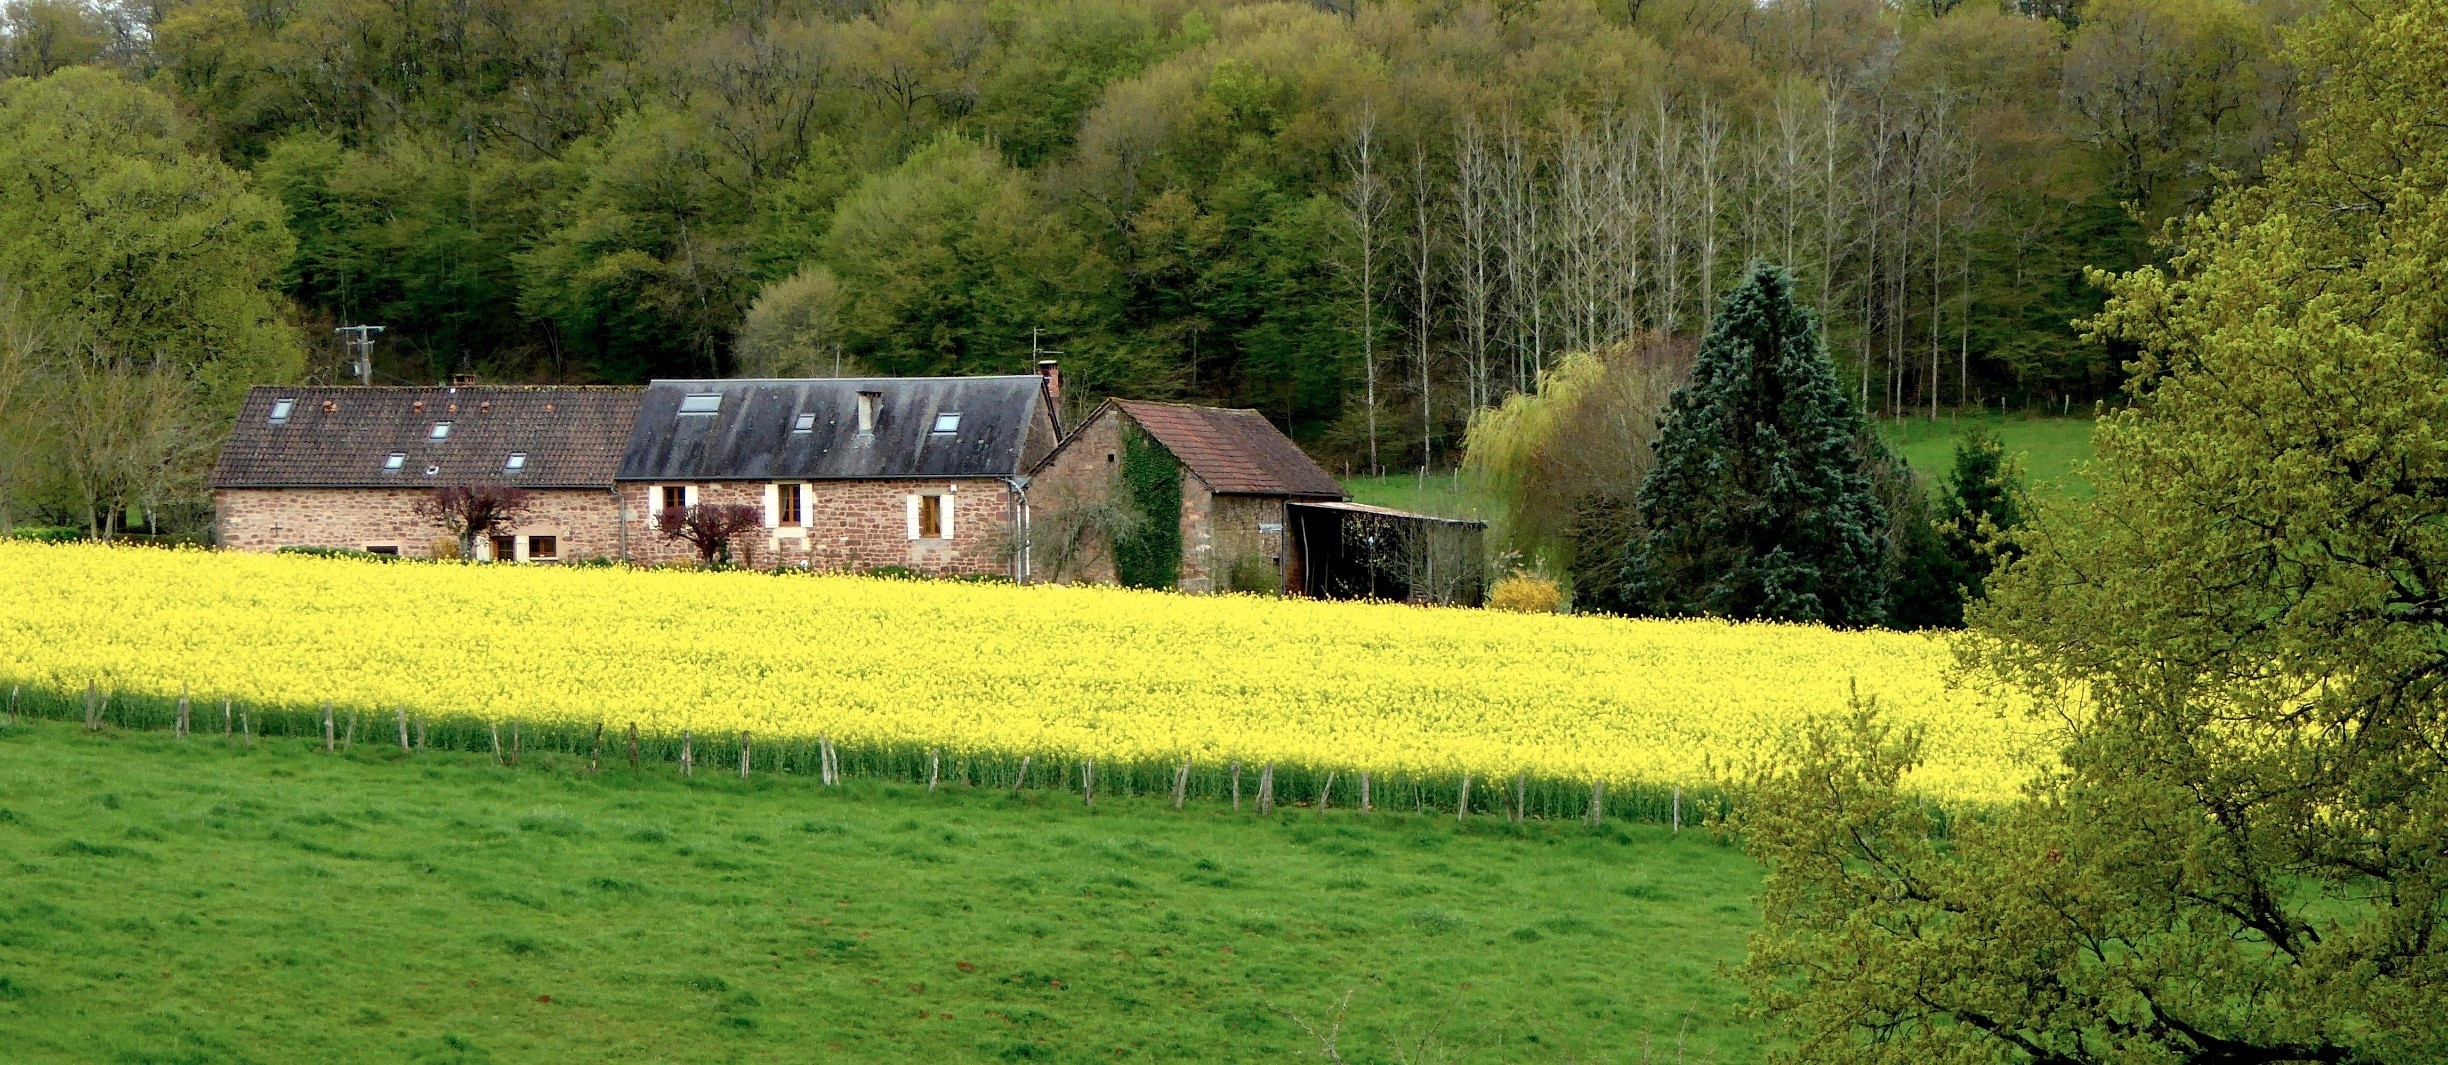 Badefols-d'Ans, Dordogne, Frankreich